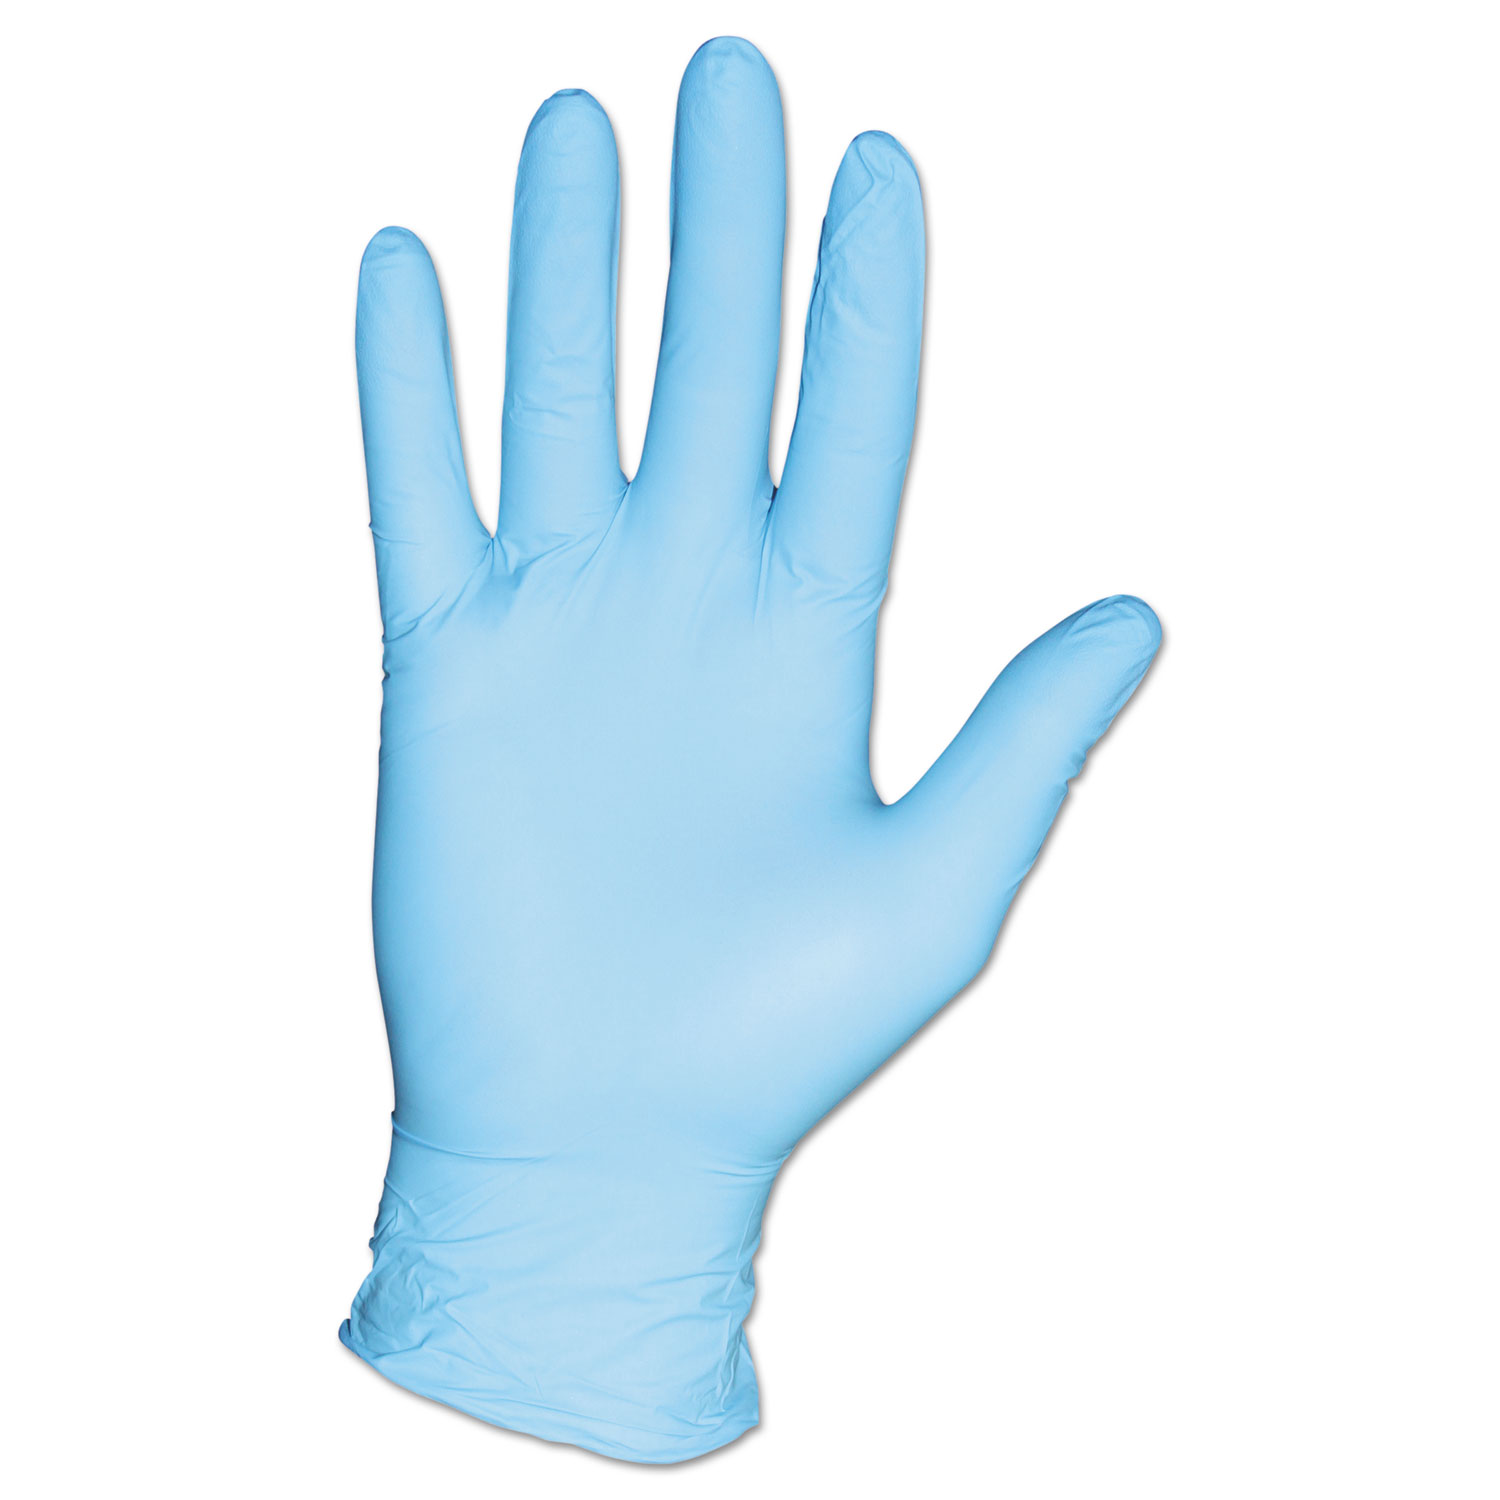  Impact 8644XL Pro-Guard Disposable Powder-Free General-Purpose Nitrile Gloves, Blue, X-Large, 100/Box, 10 Boxes/Carton (IMP8644XL) 